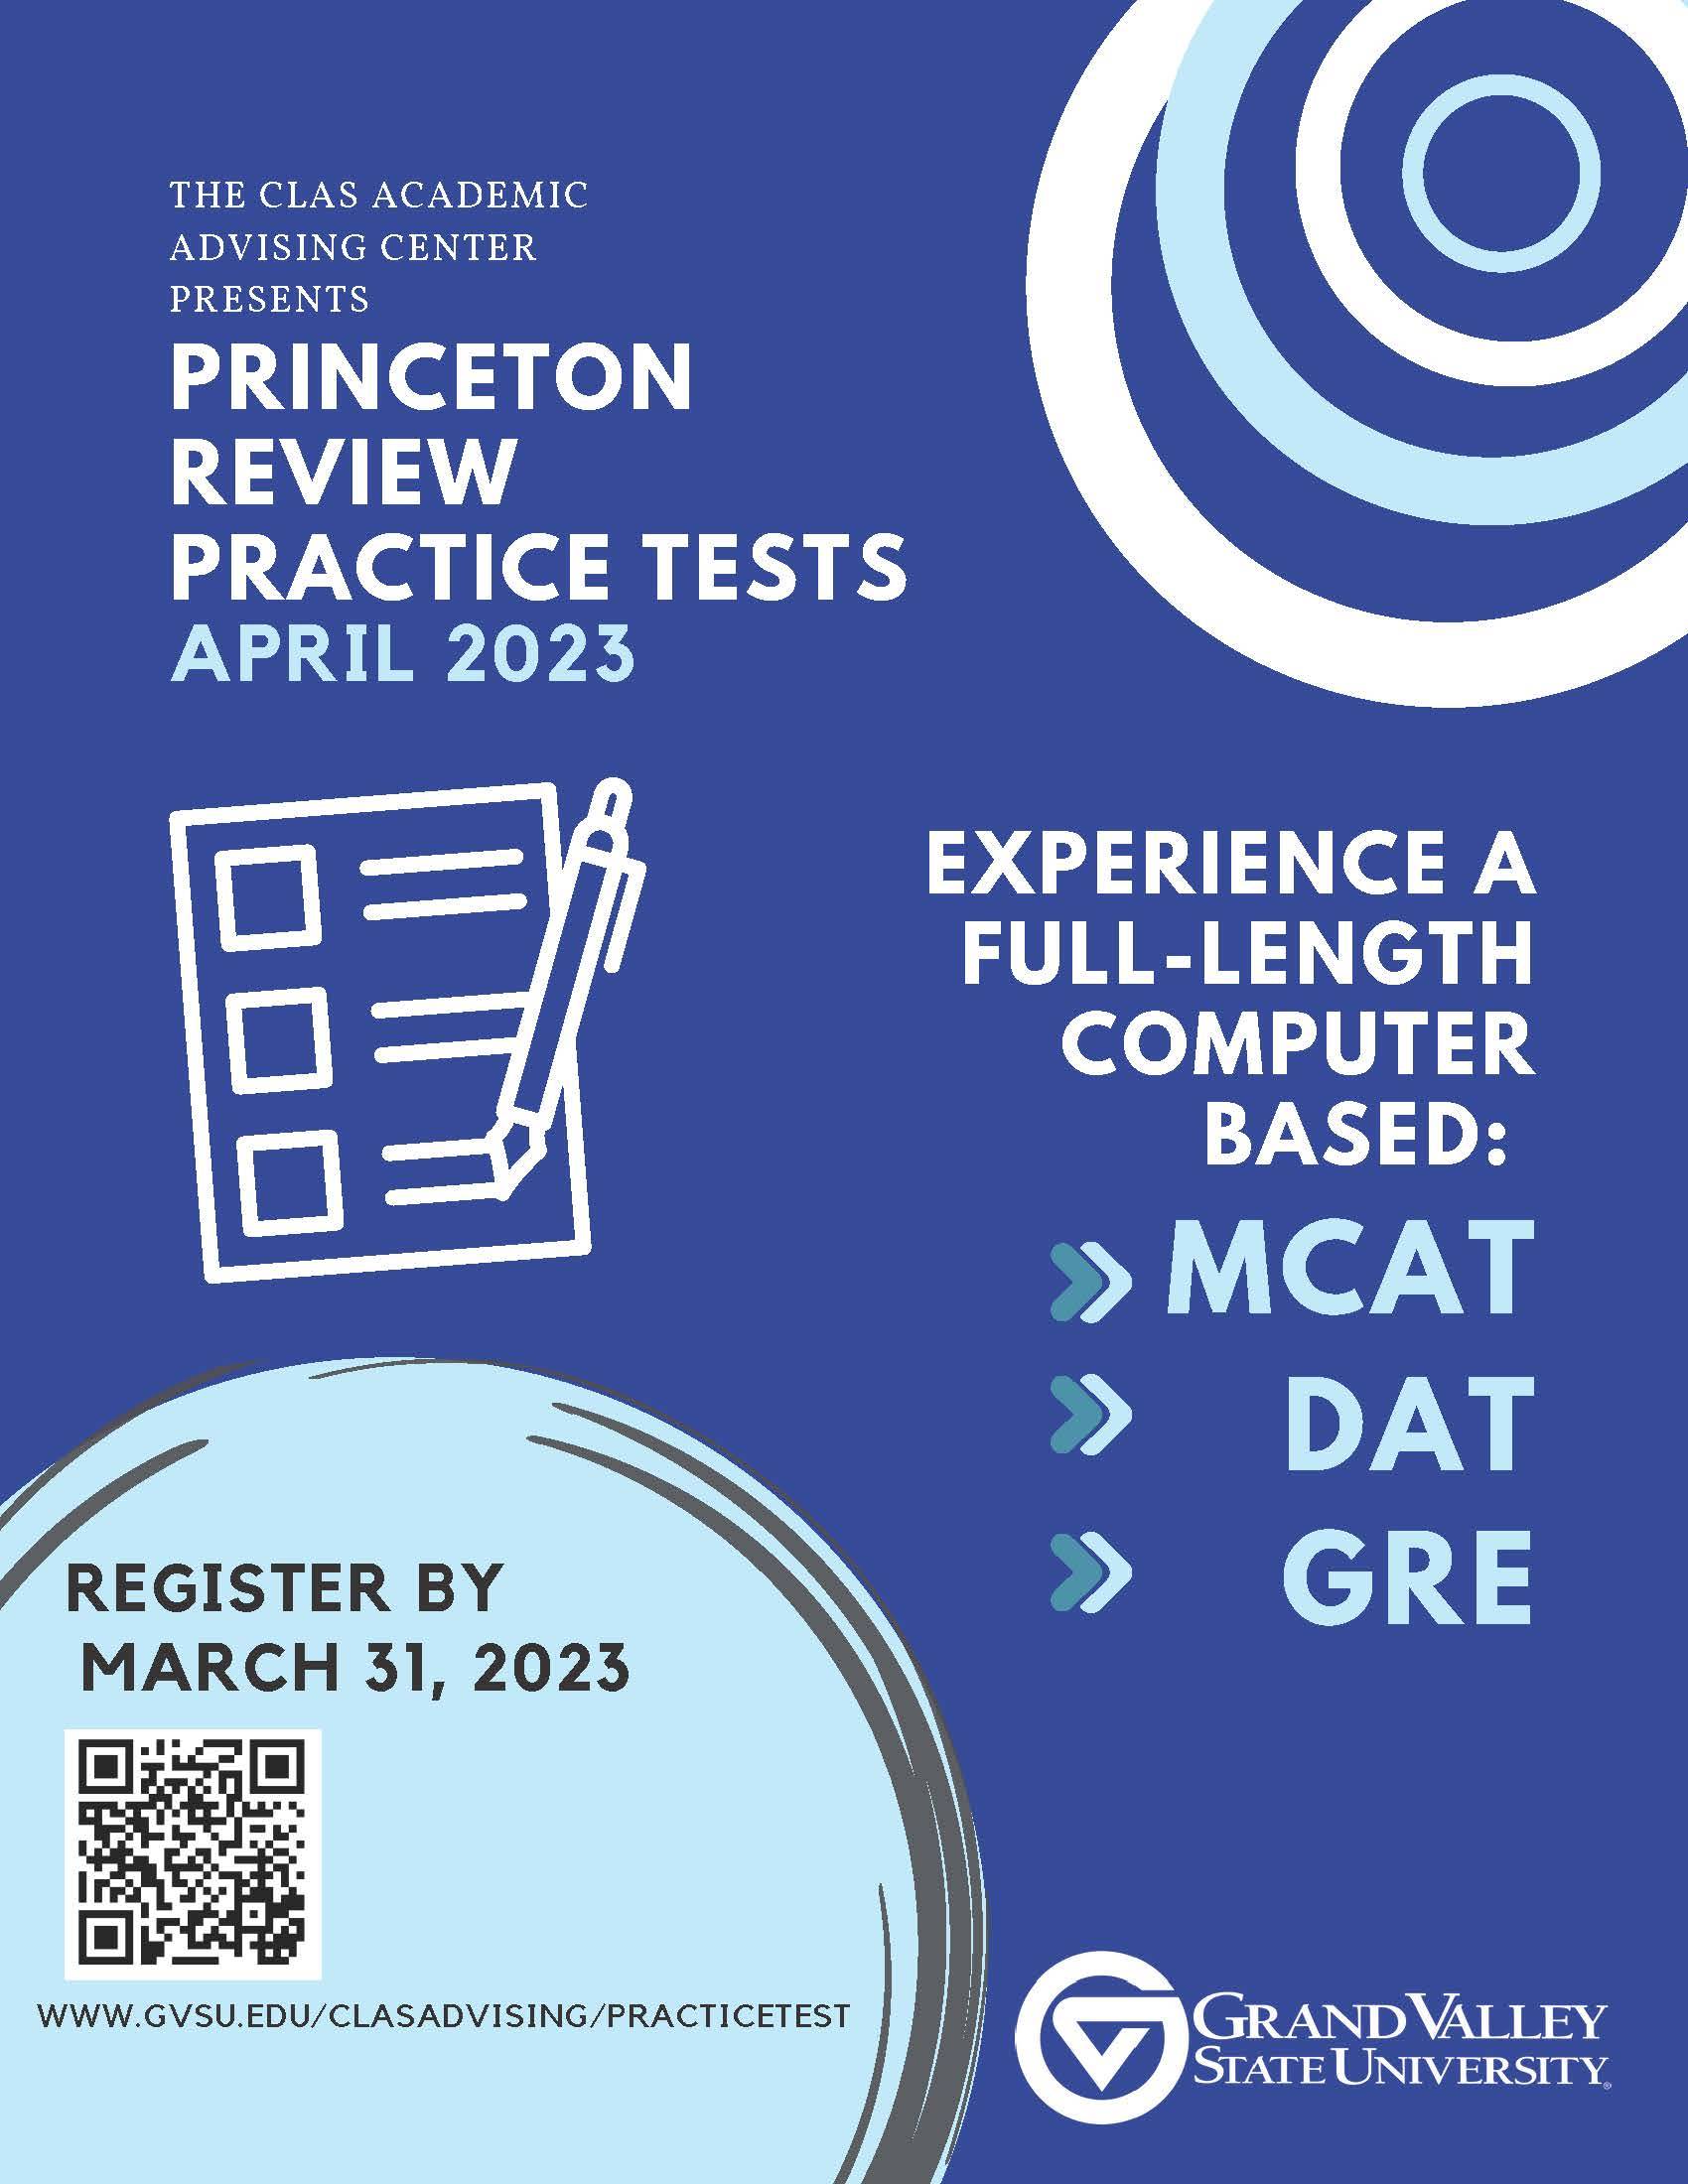 Princeton Review Practice Test dates